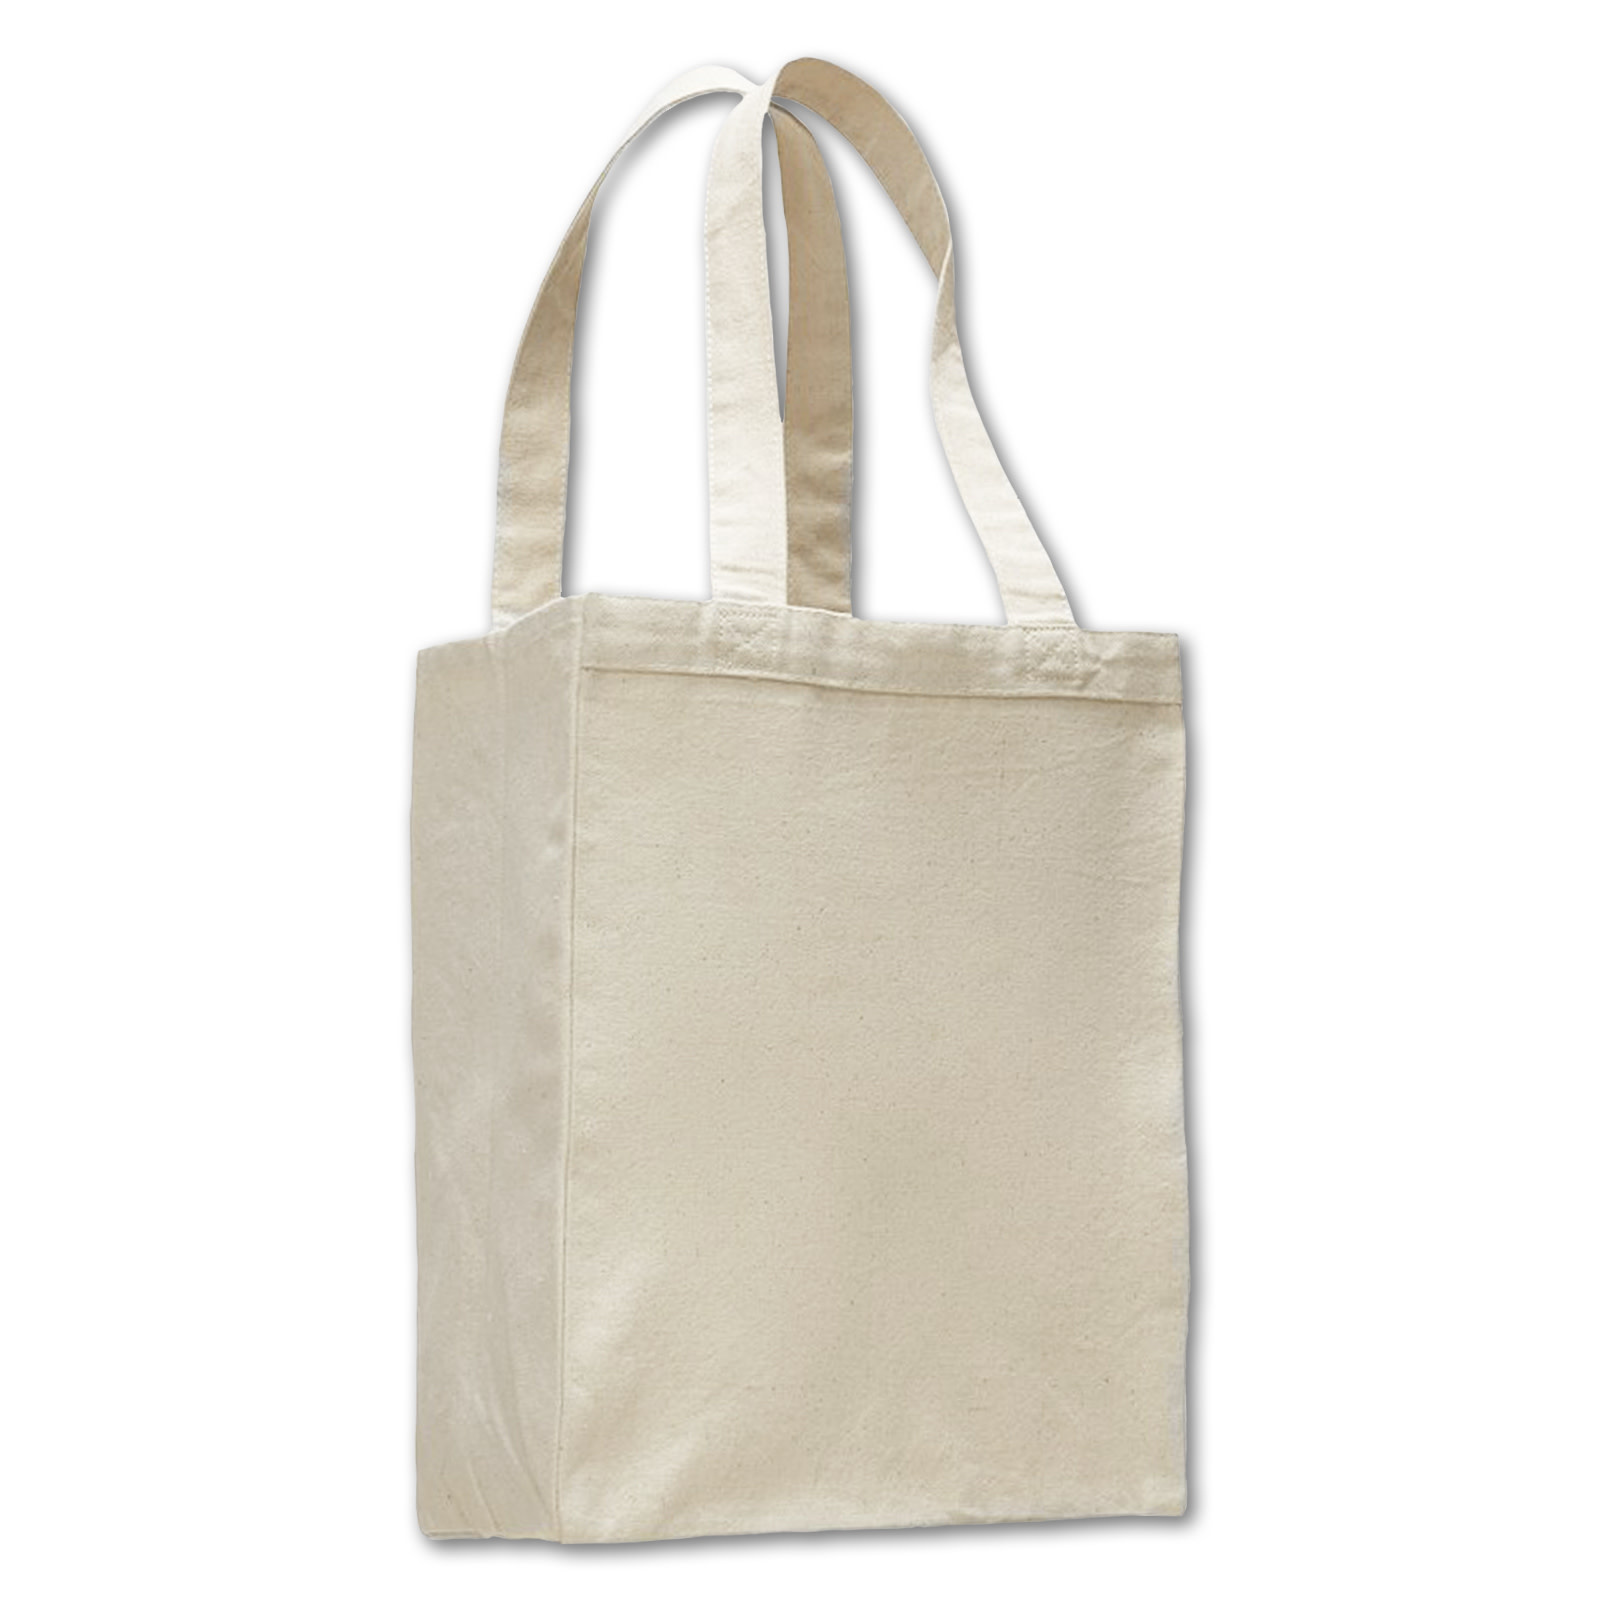 Customizable SM Canvas Tote / Book Bag